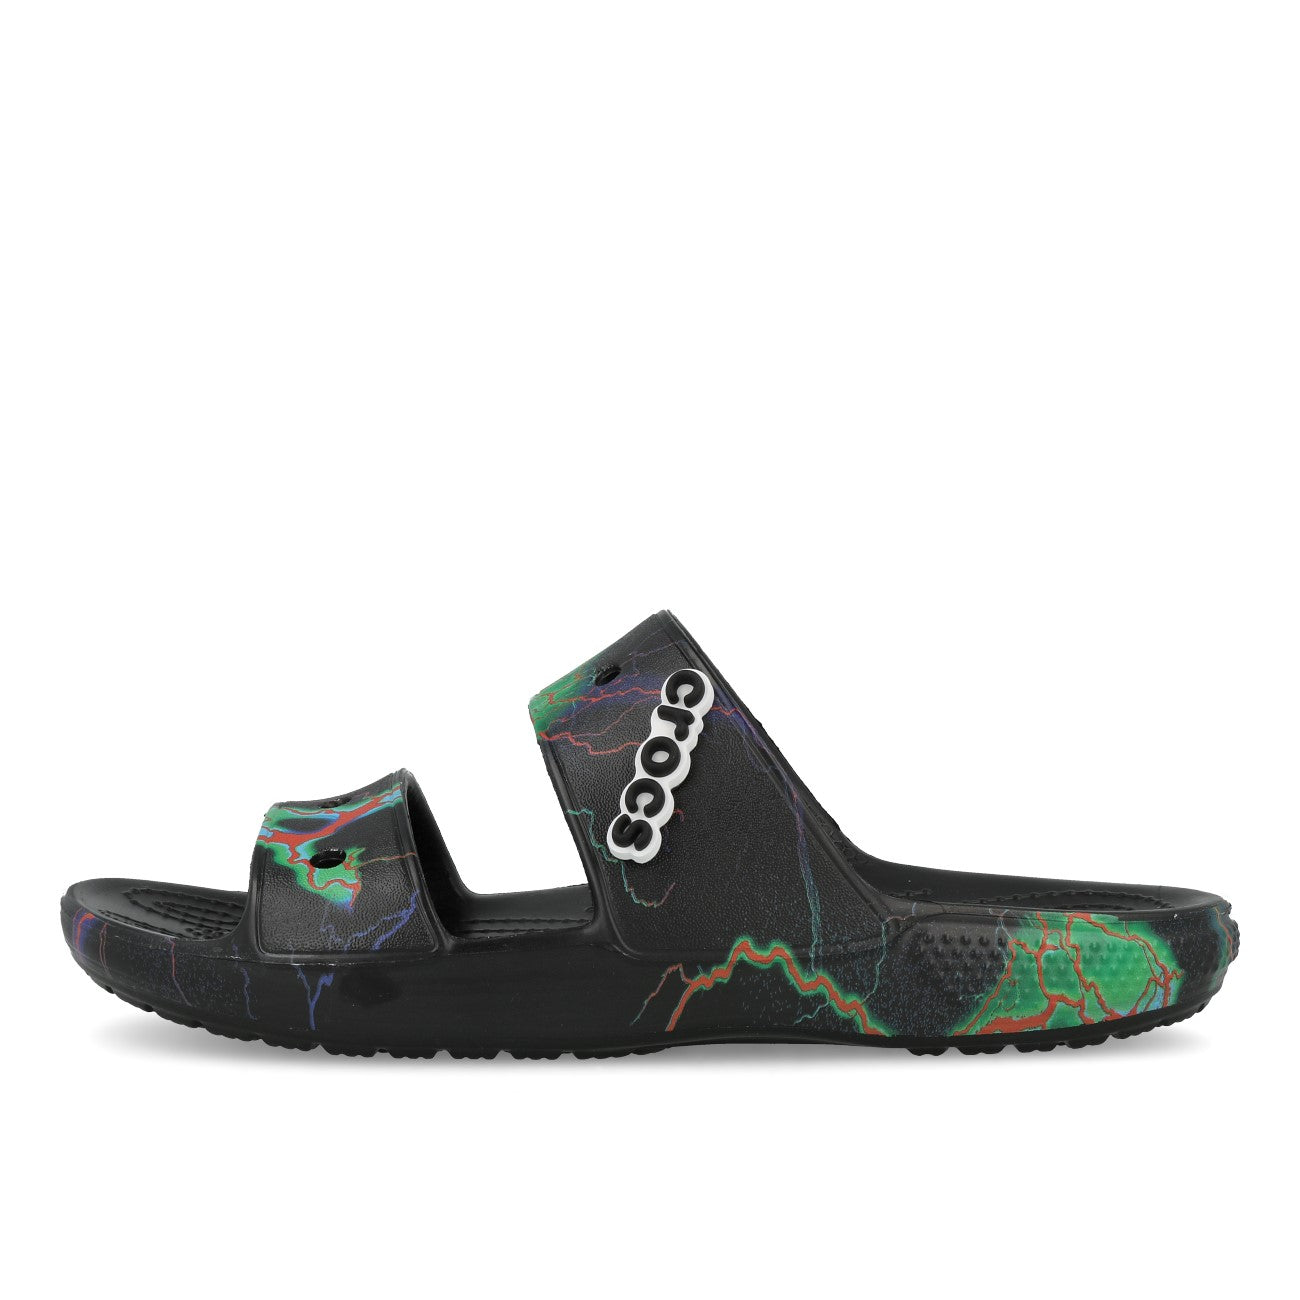 Crocs Classic Crocs Out of this World Sandal Black Lightning Bolts